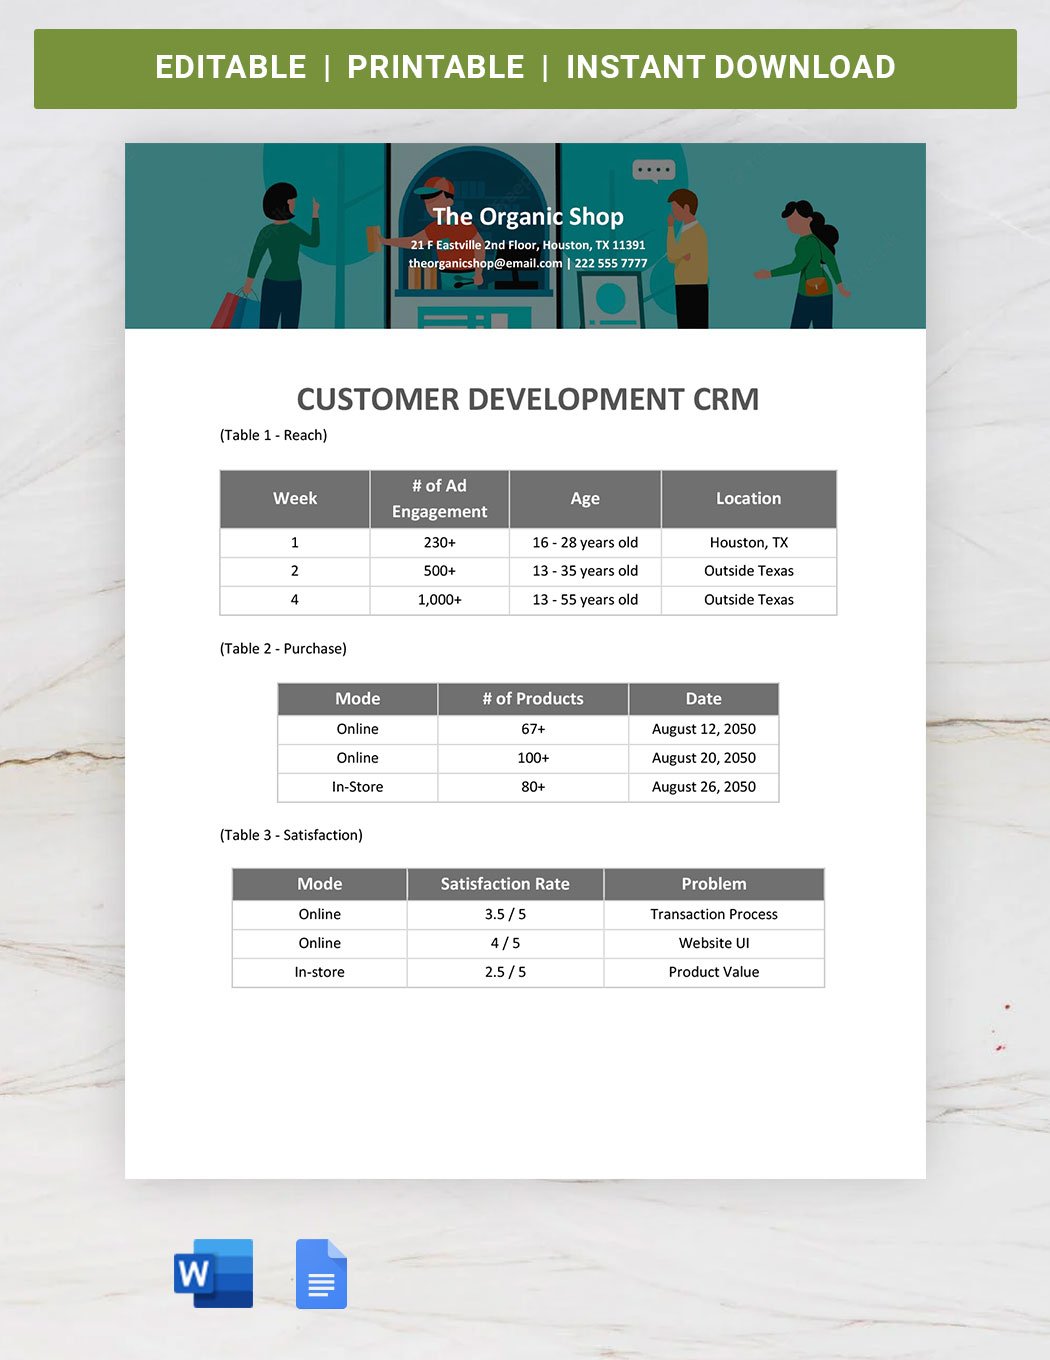 Customer Development CRM Template